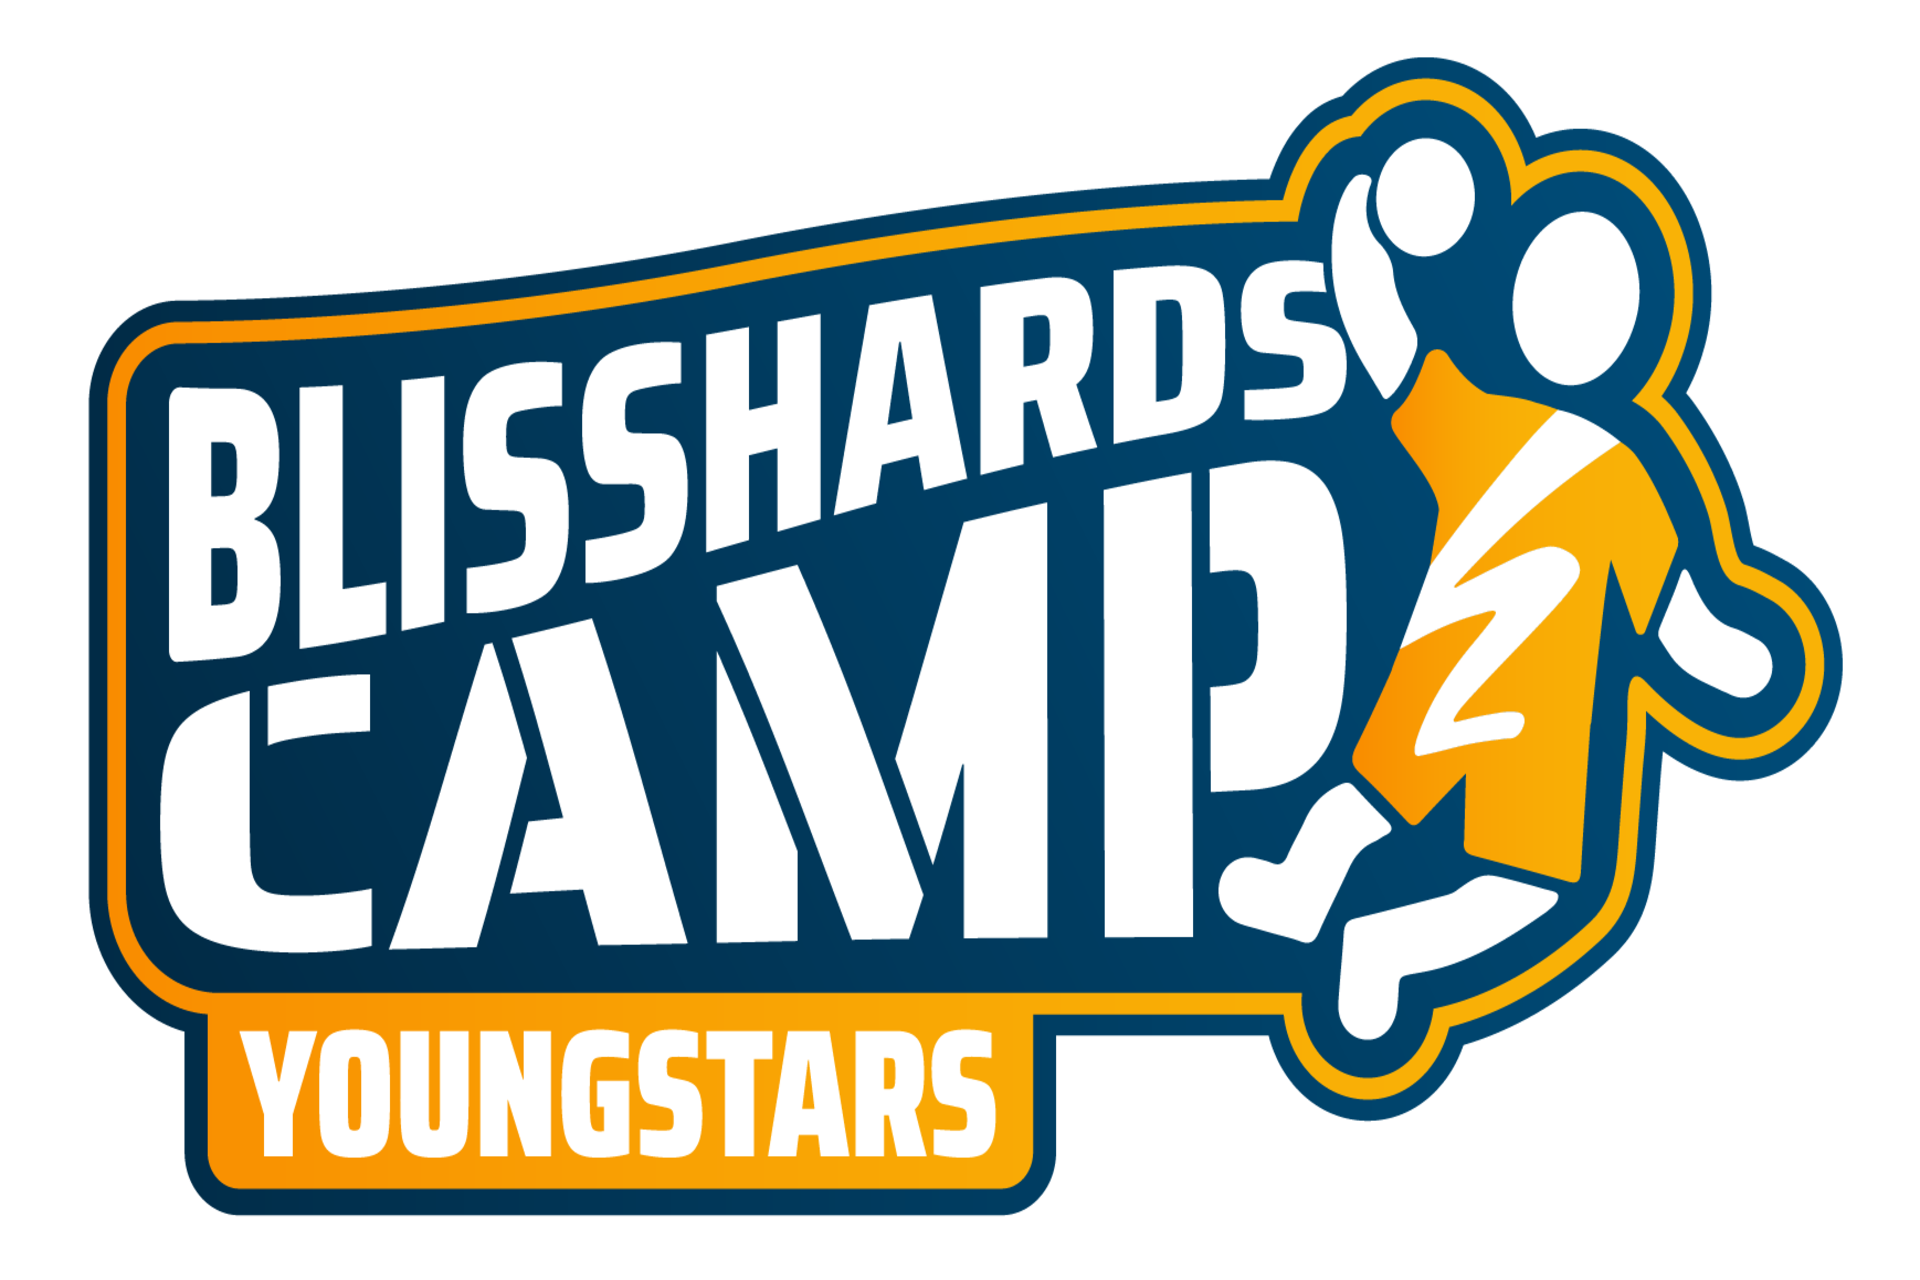 Erstes Blisshards Youngstars Camp